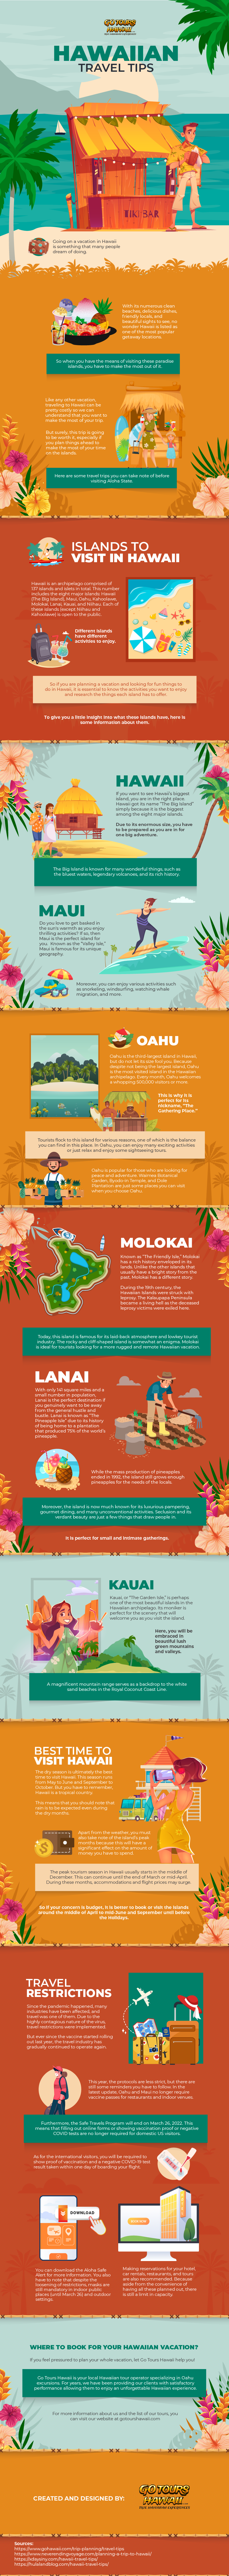 Hawaiian Travel Tips - Infographic 2130